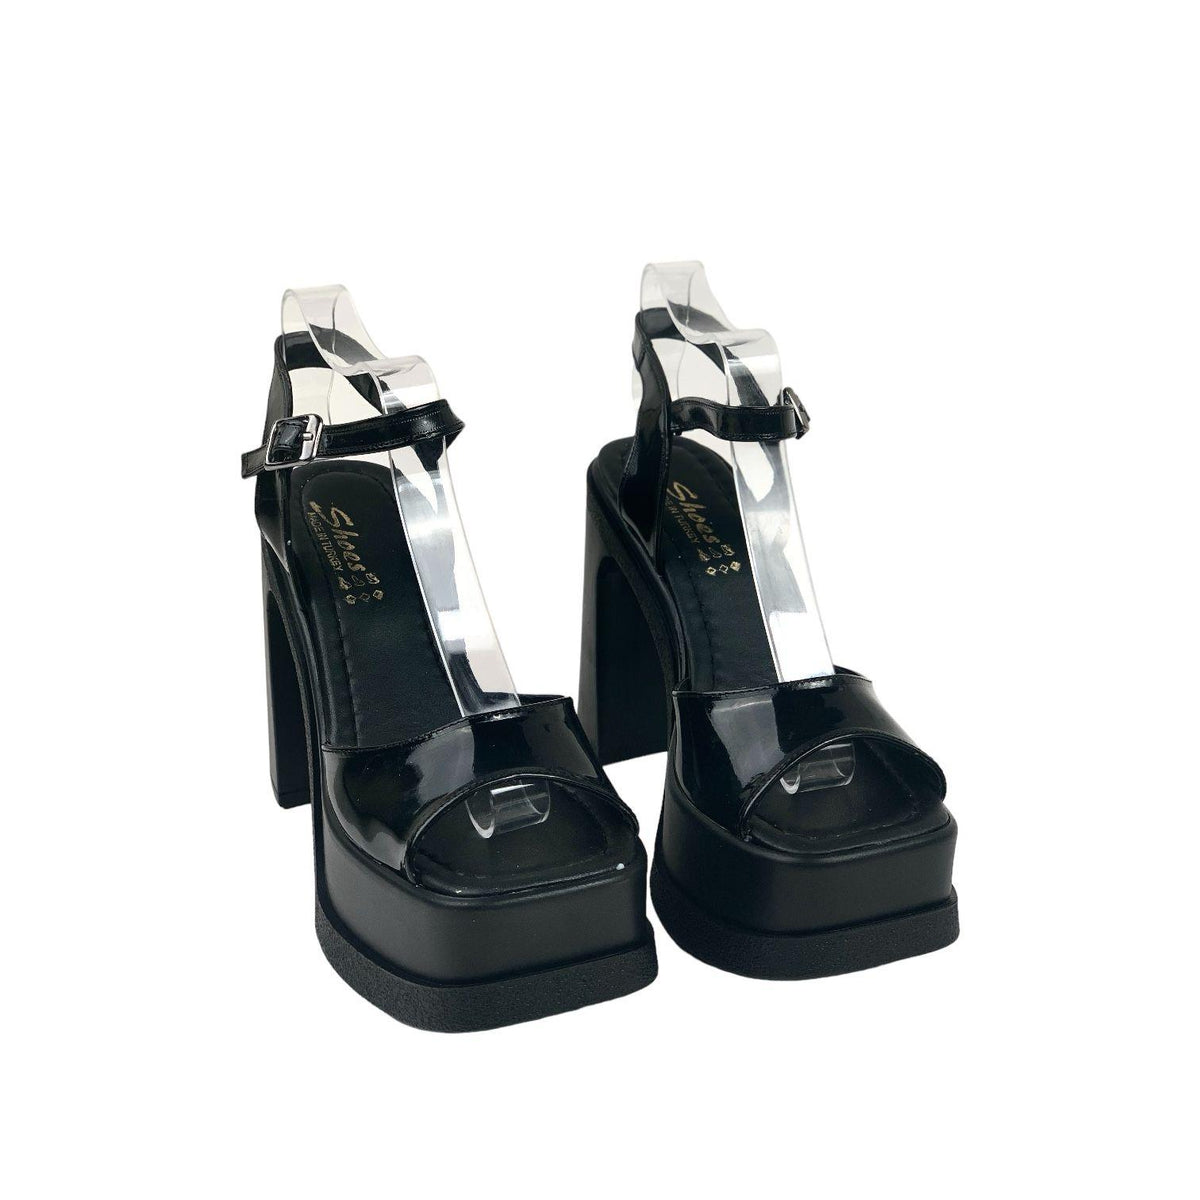 Women's Oklam Black Patent Leather Single Band Geliklink Shoes Sandals 15 Cm Heel - STREETMODE ™